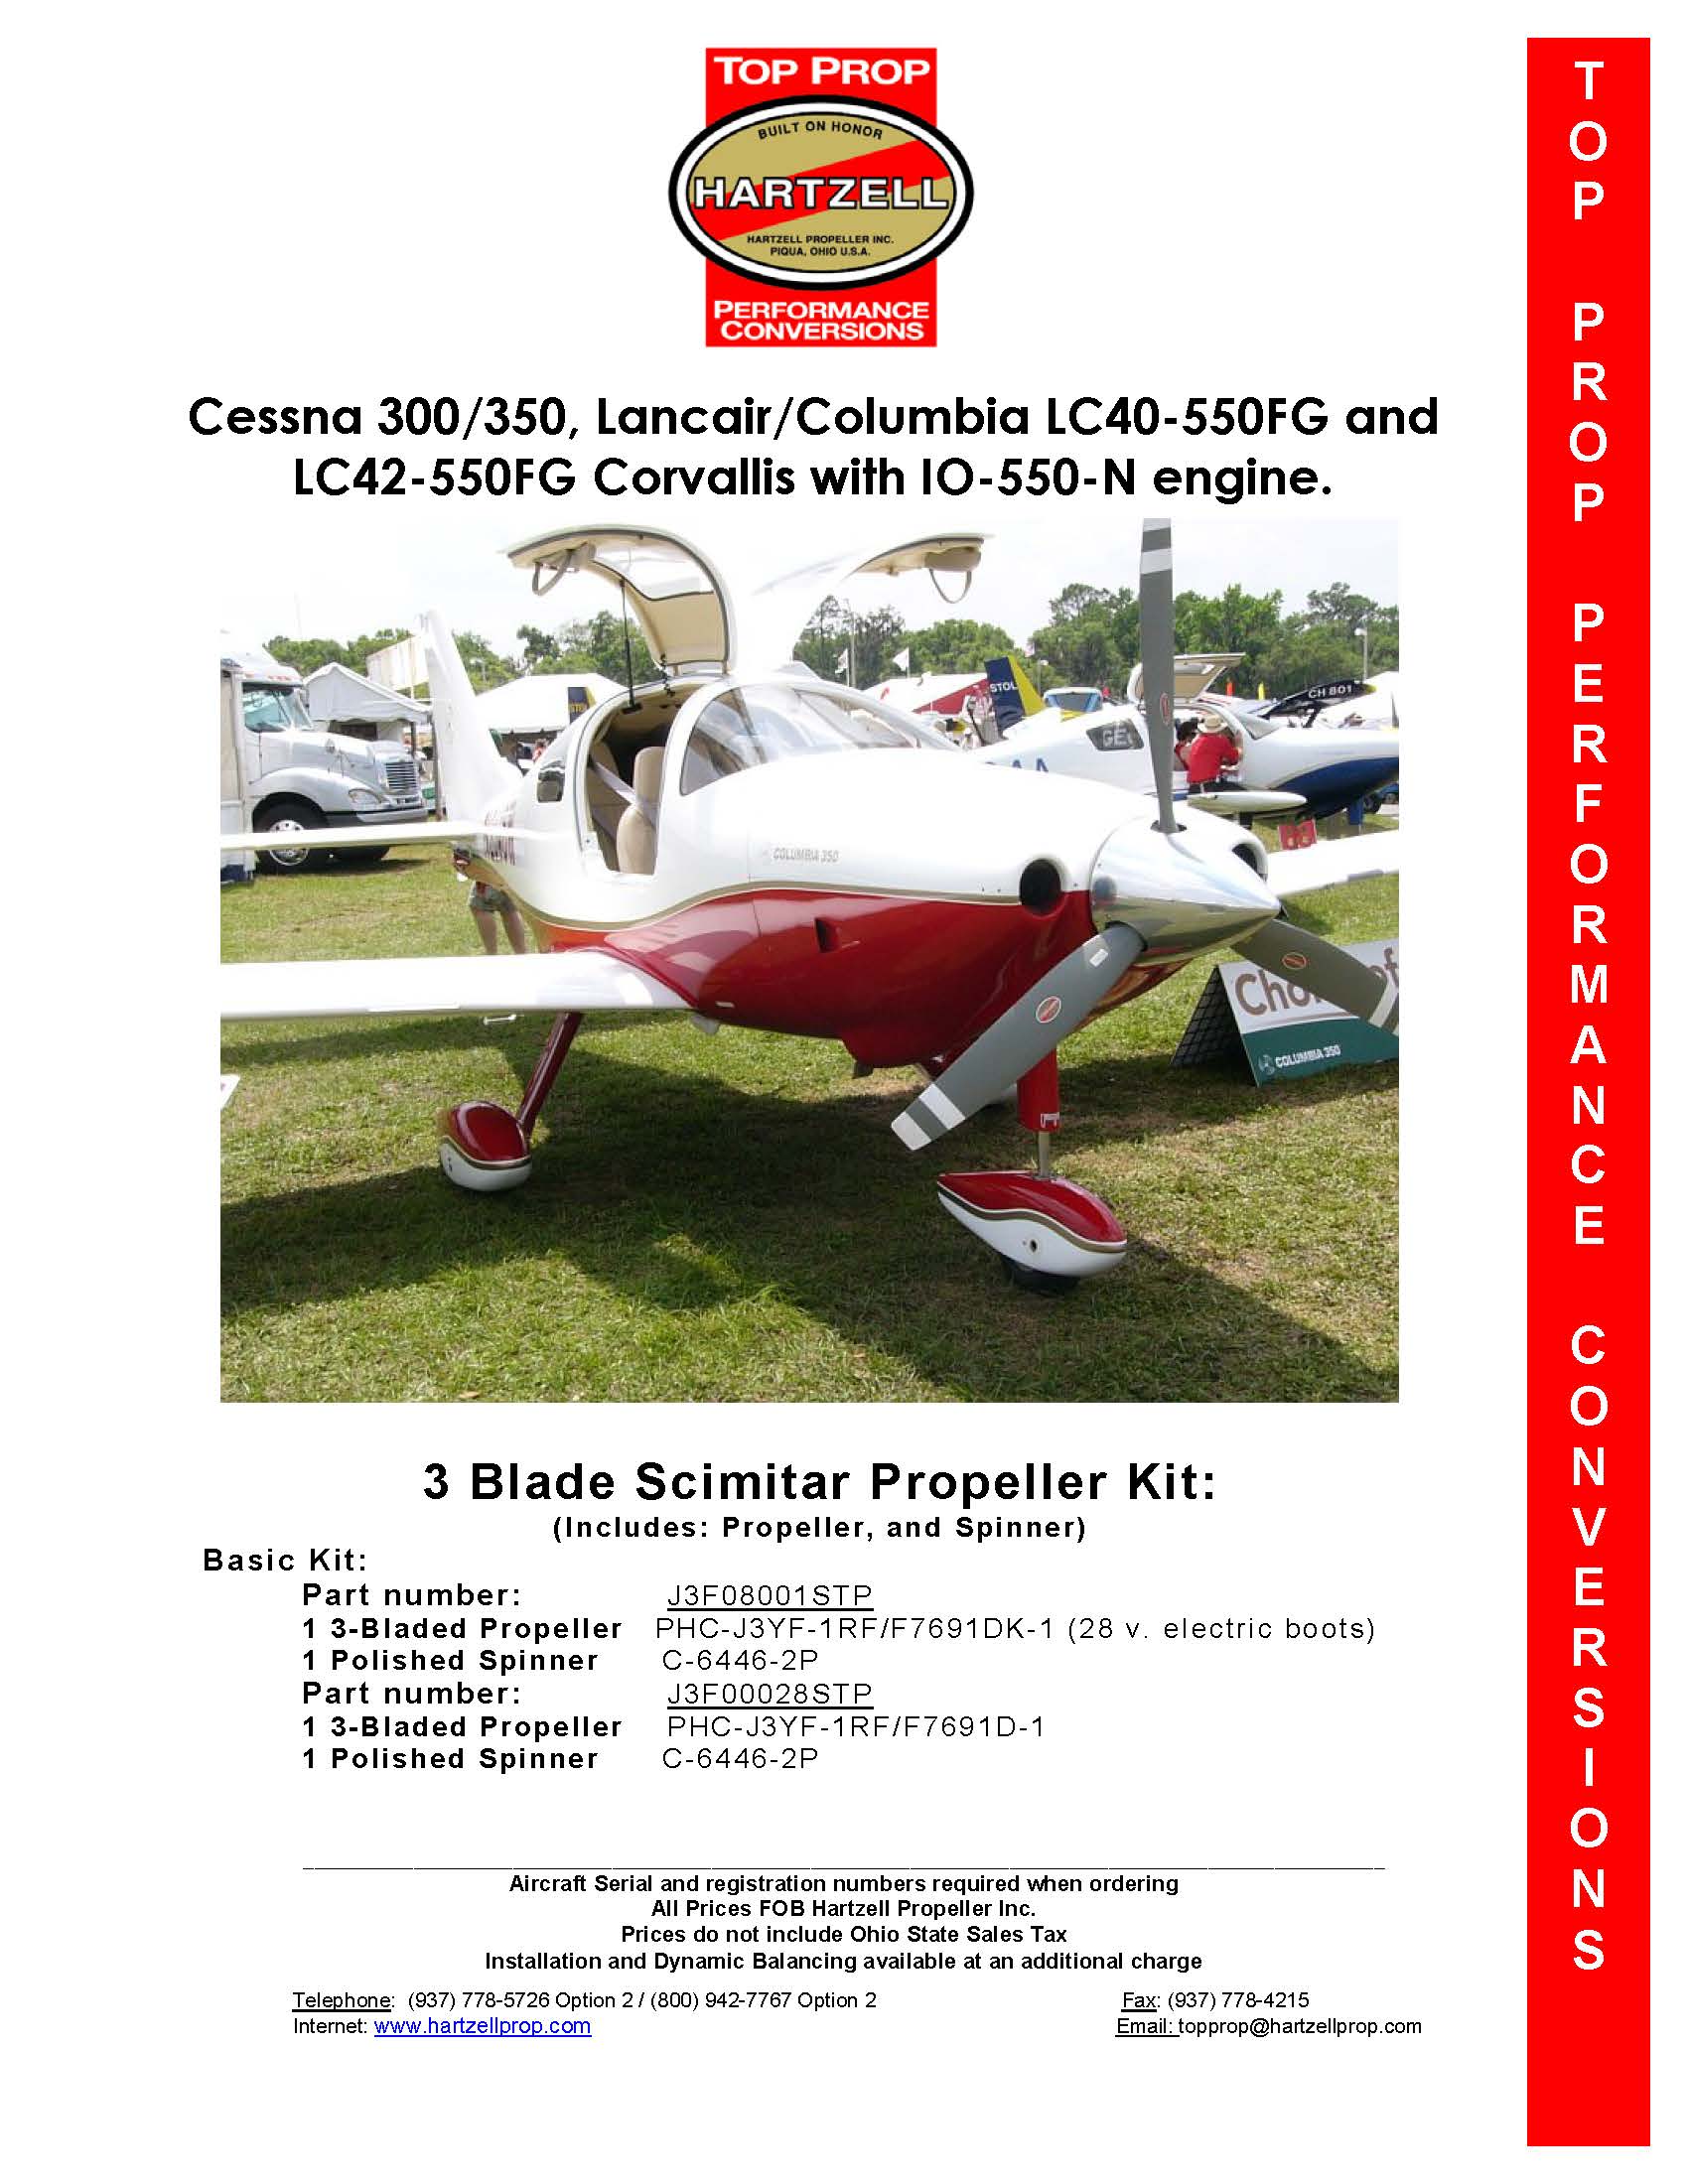 Cessna-300-350-LANCAIR-COLUMBIA-CORVALLIS-J3F00028STP-PAGE-1